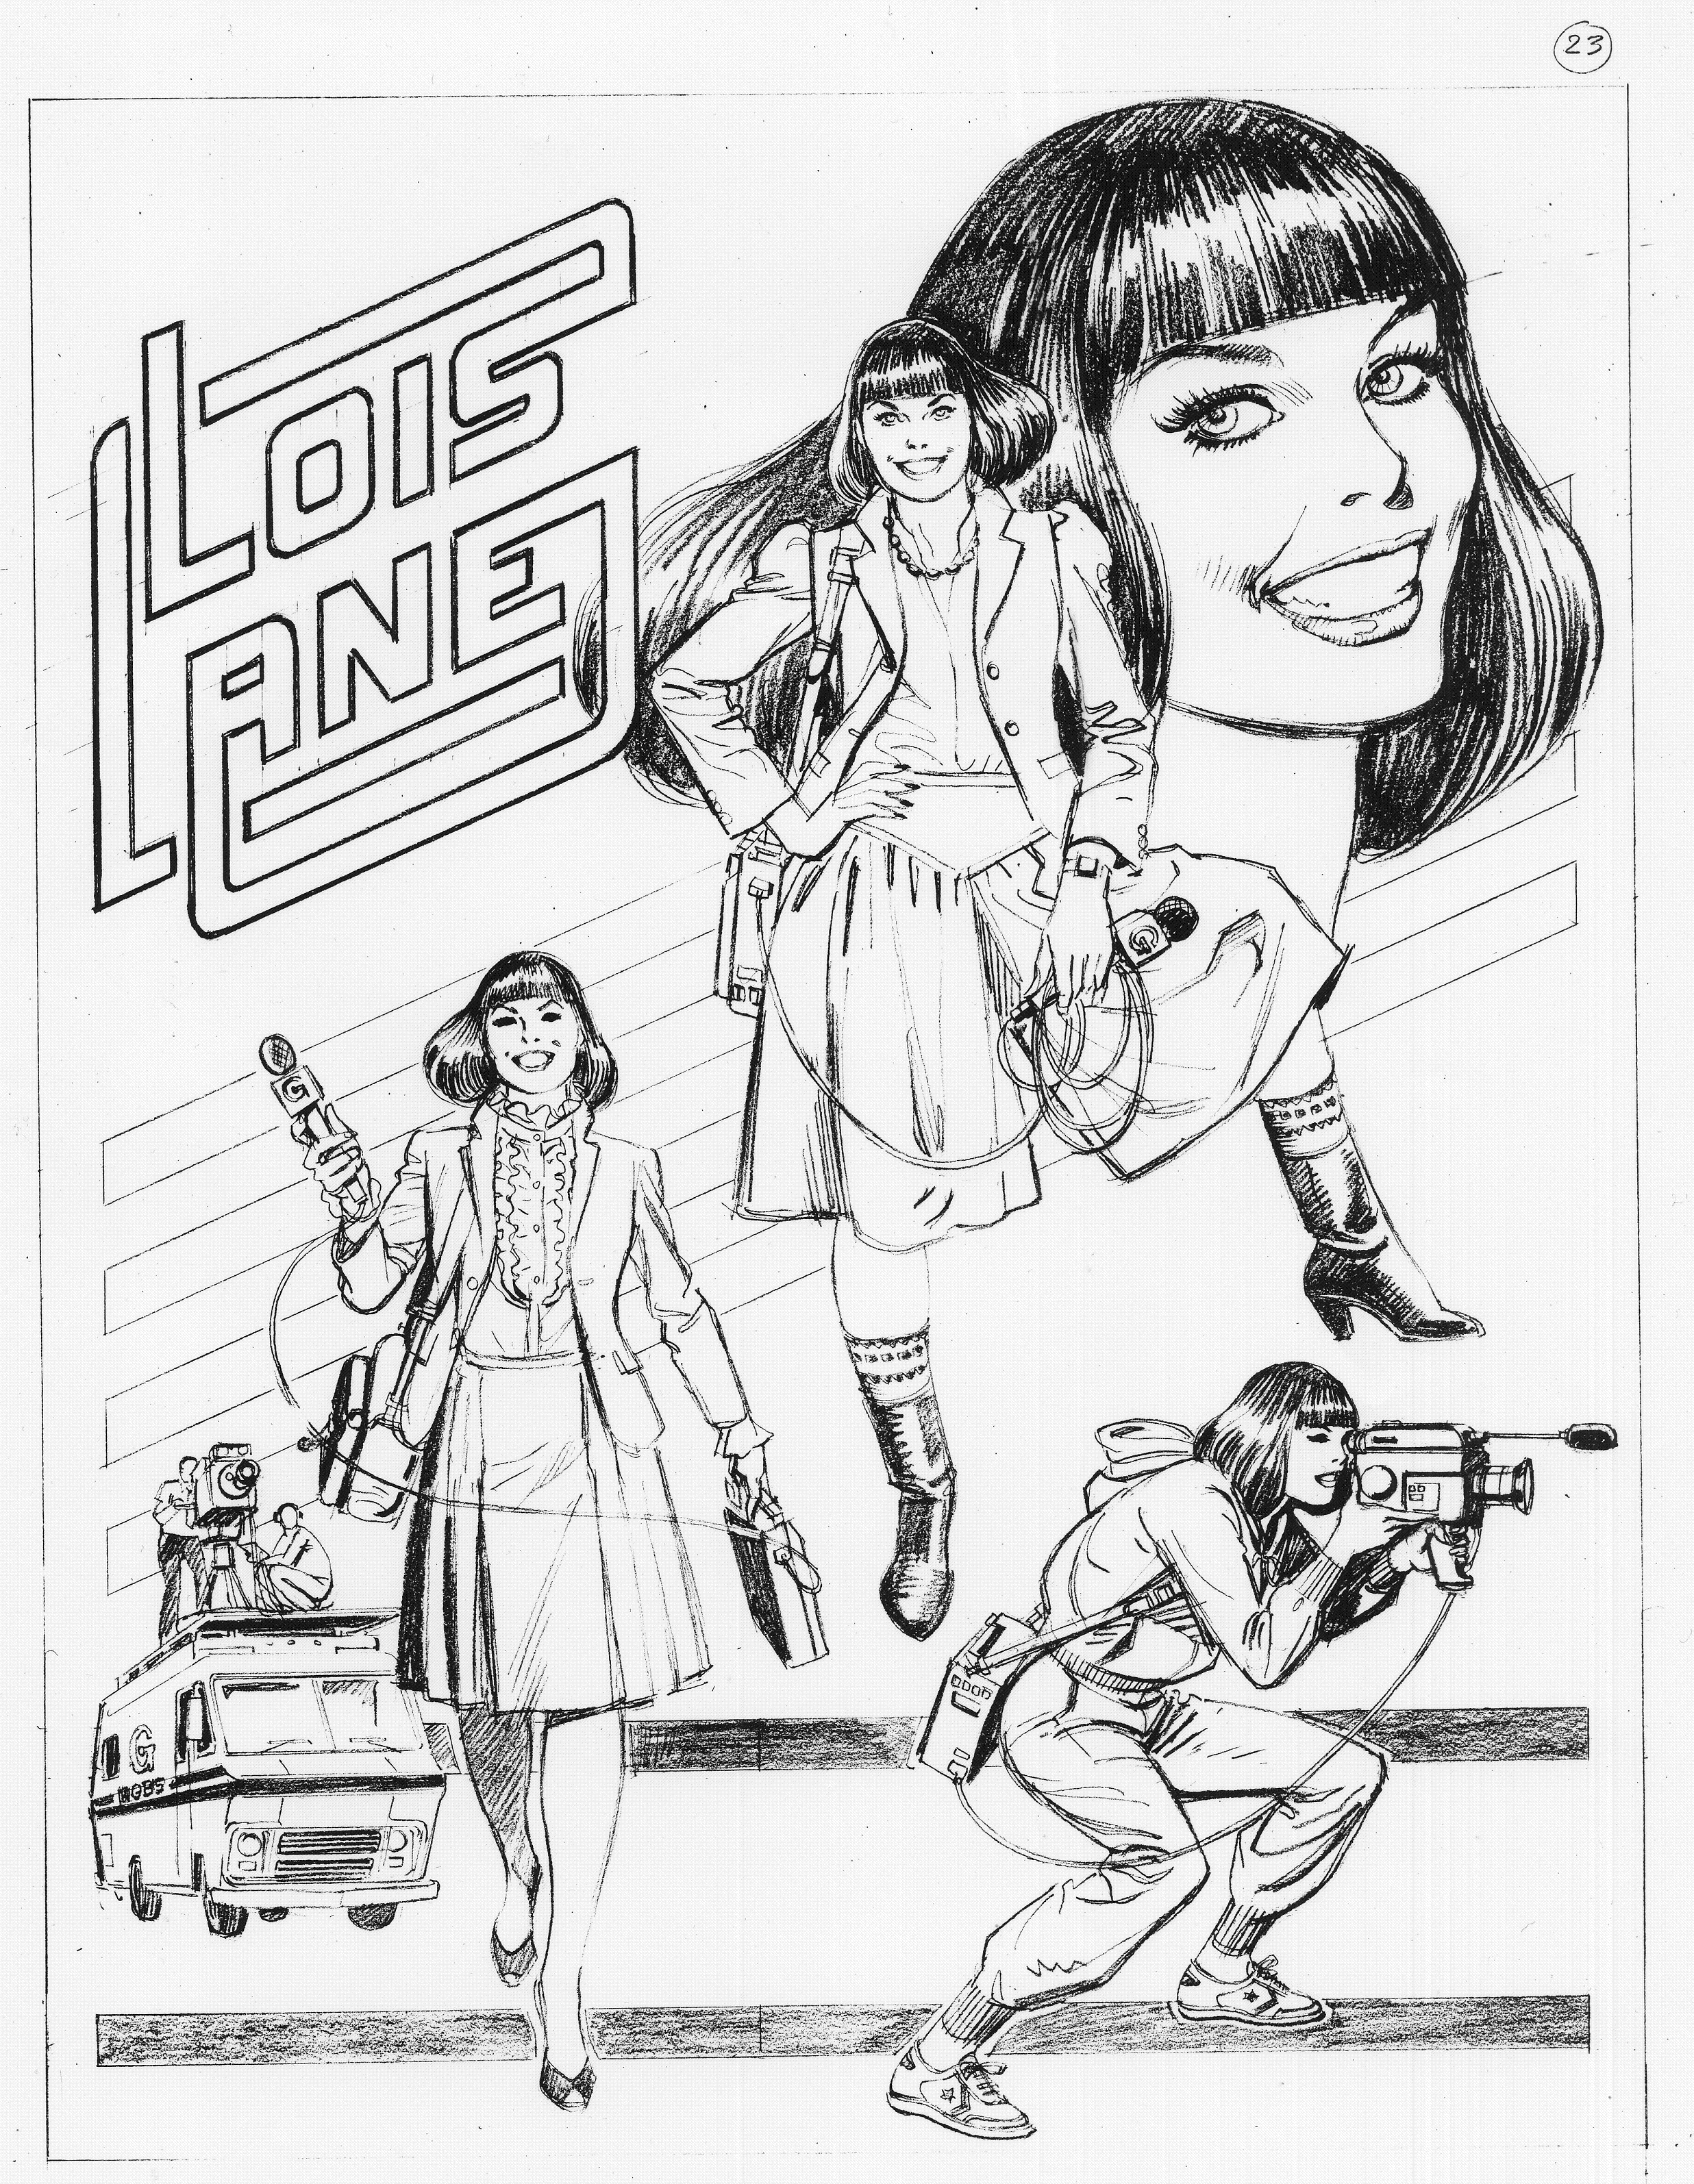 Lois Lane Cartoon